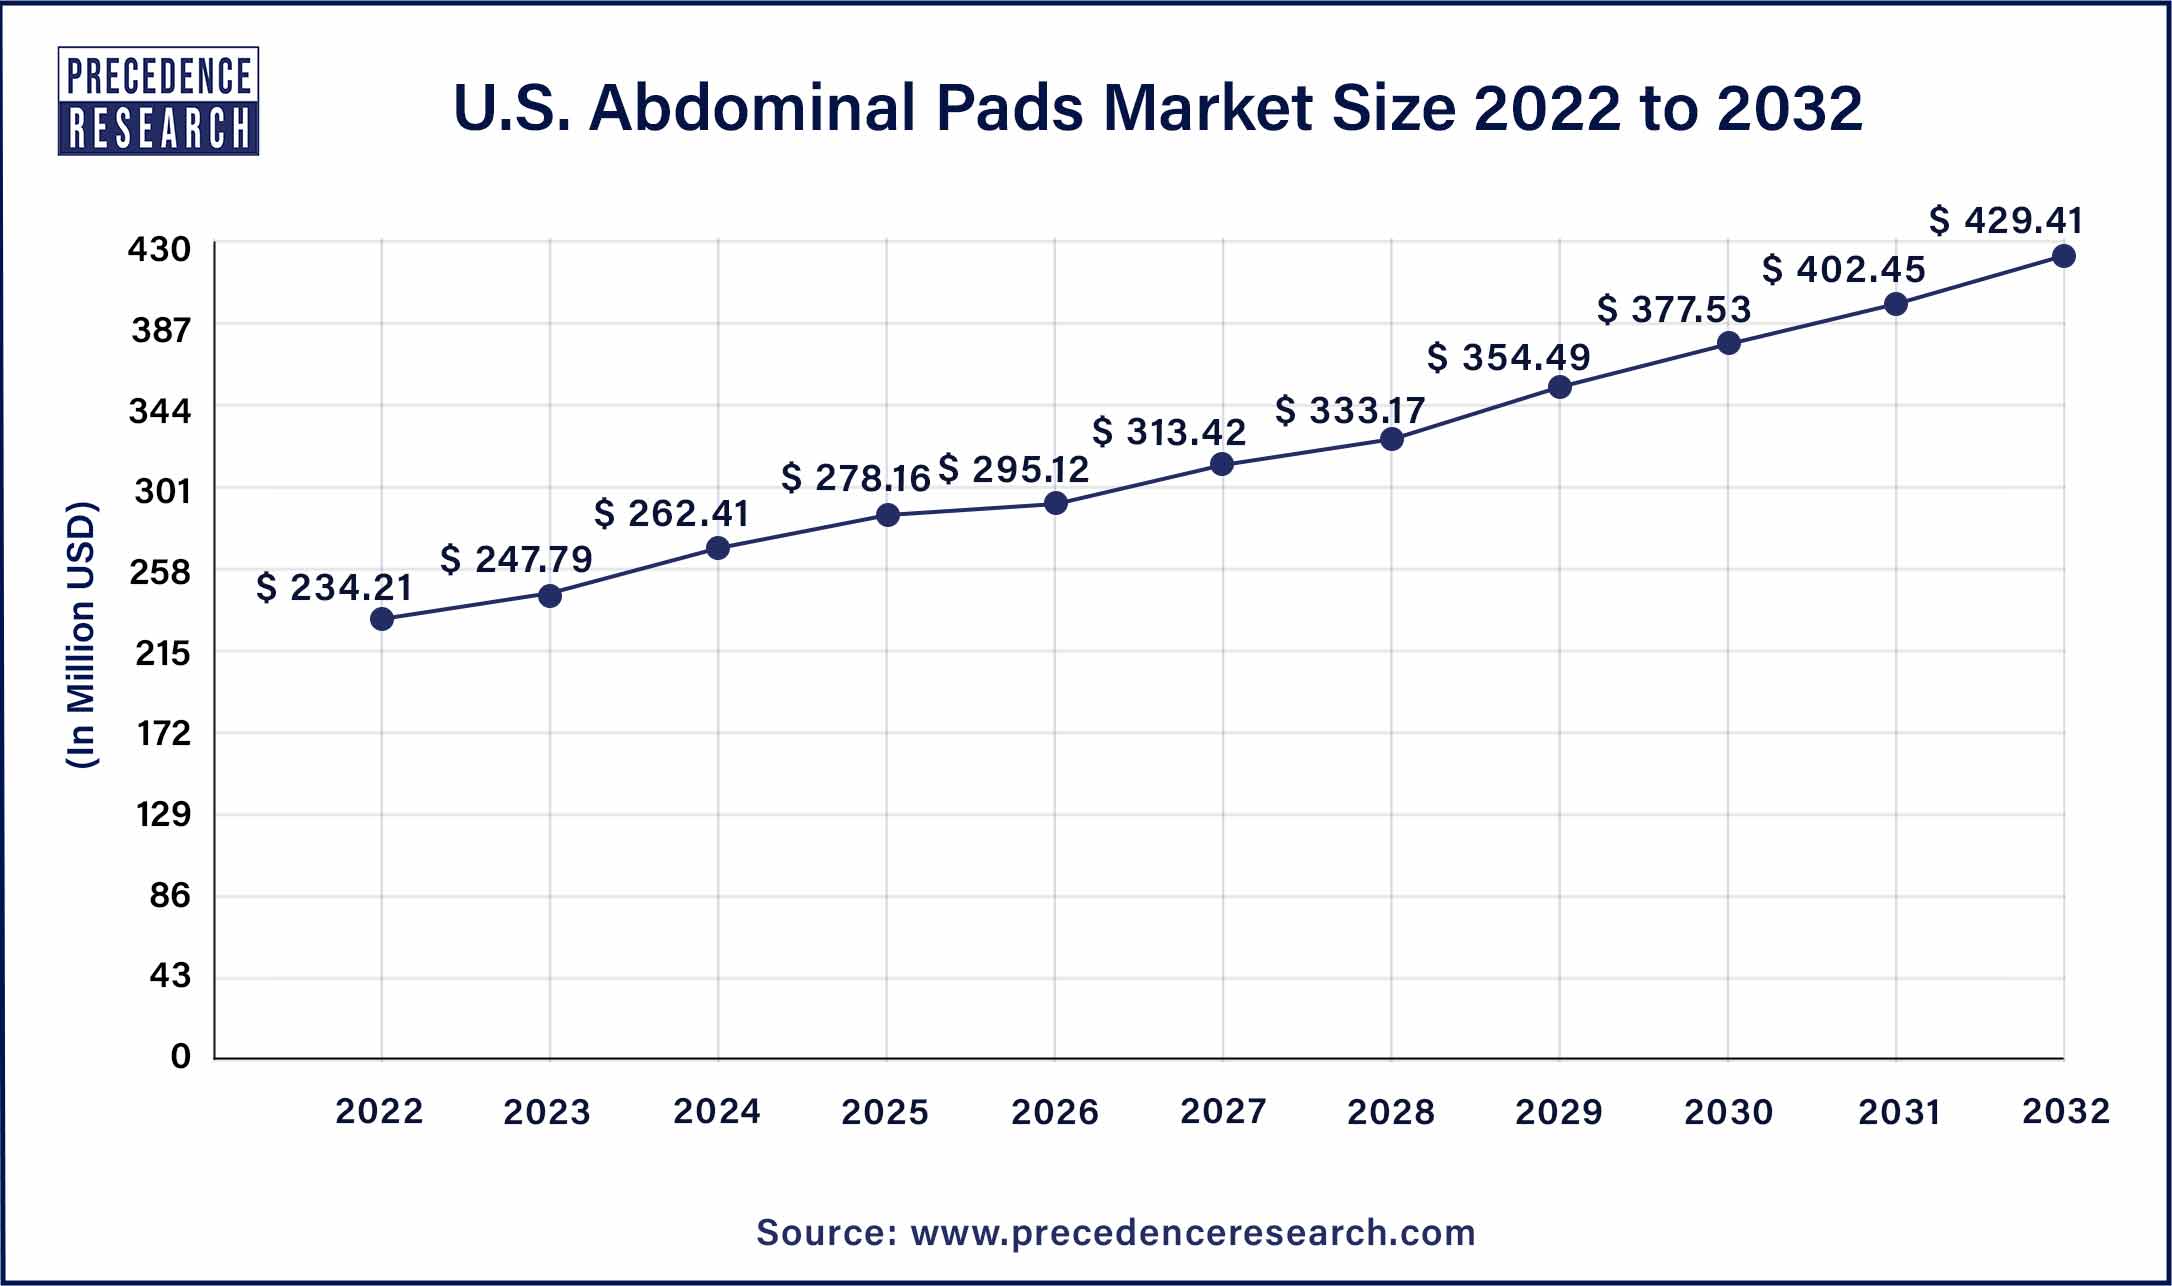 U.S. Abdominal Pads Market Size 2023 To 2032